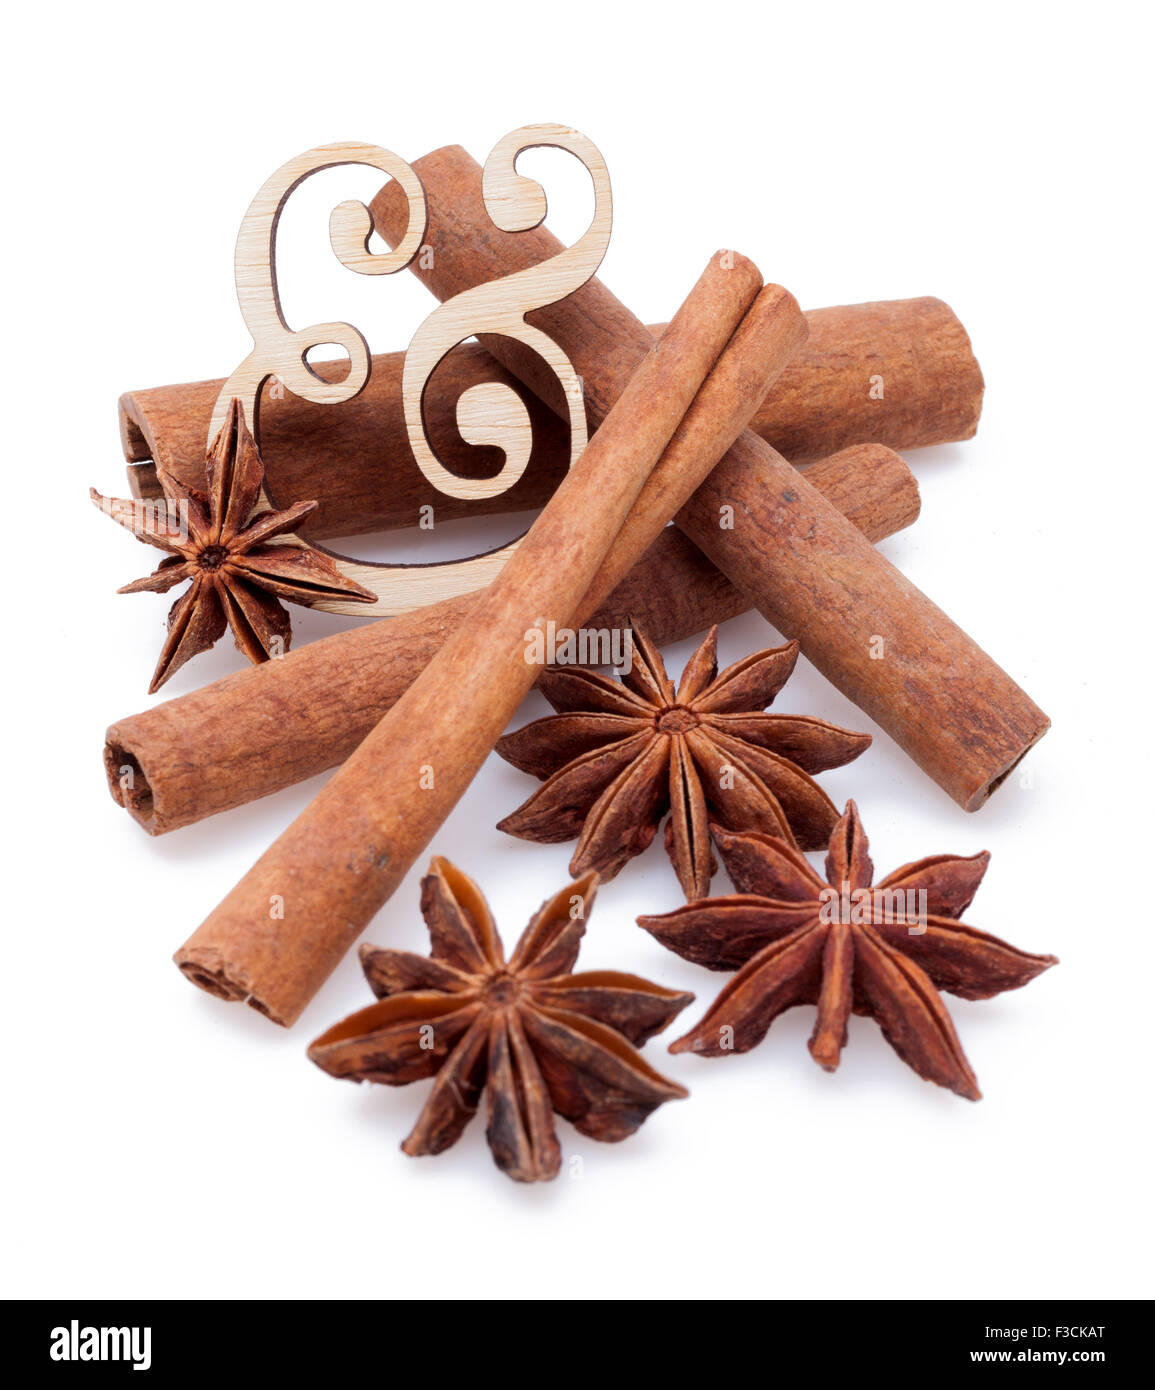 Star anise with cinnamon sticks on white Stock Photo